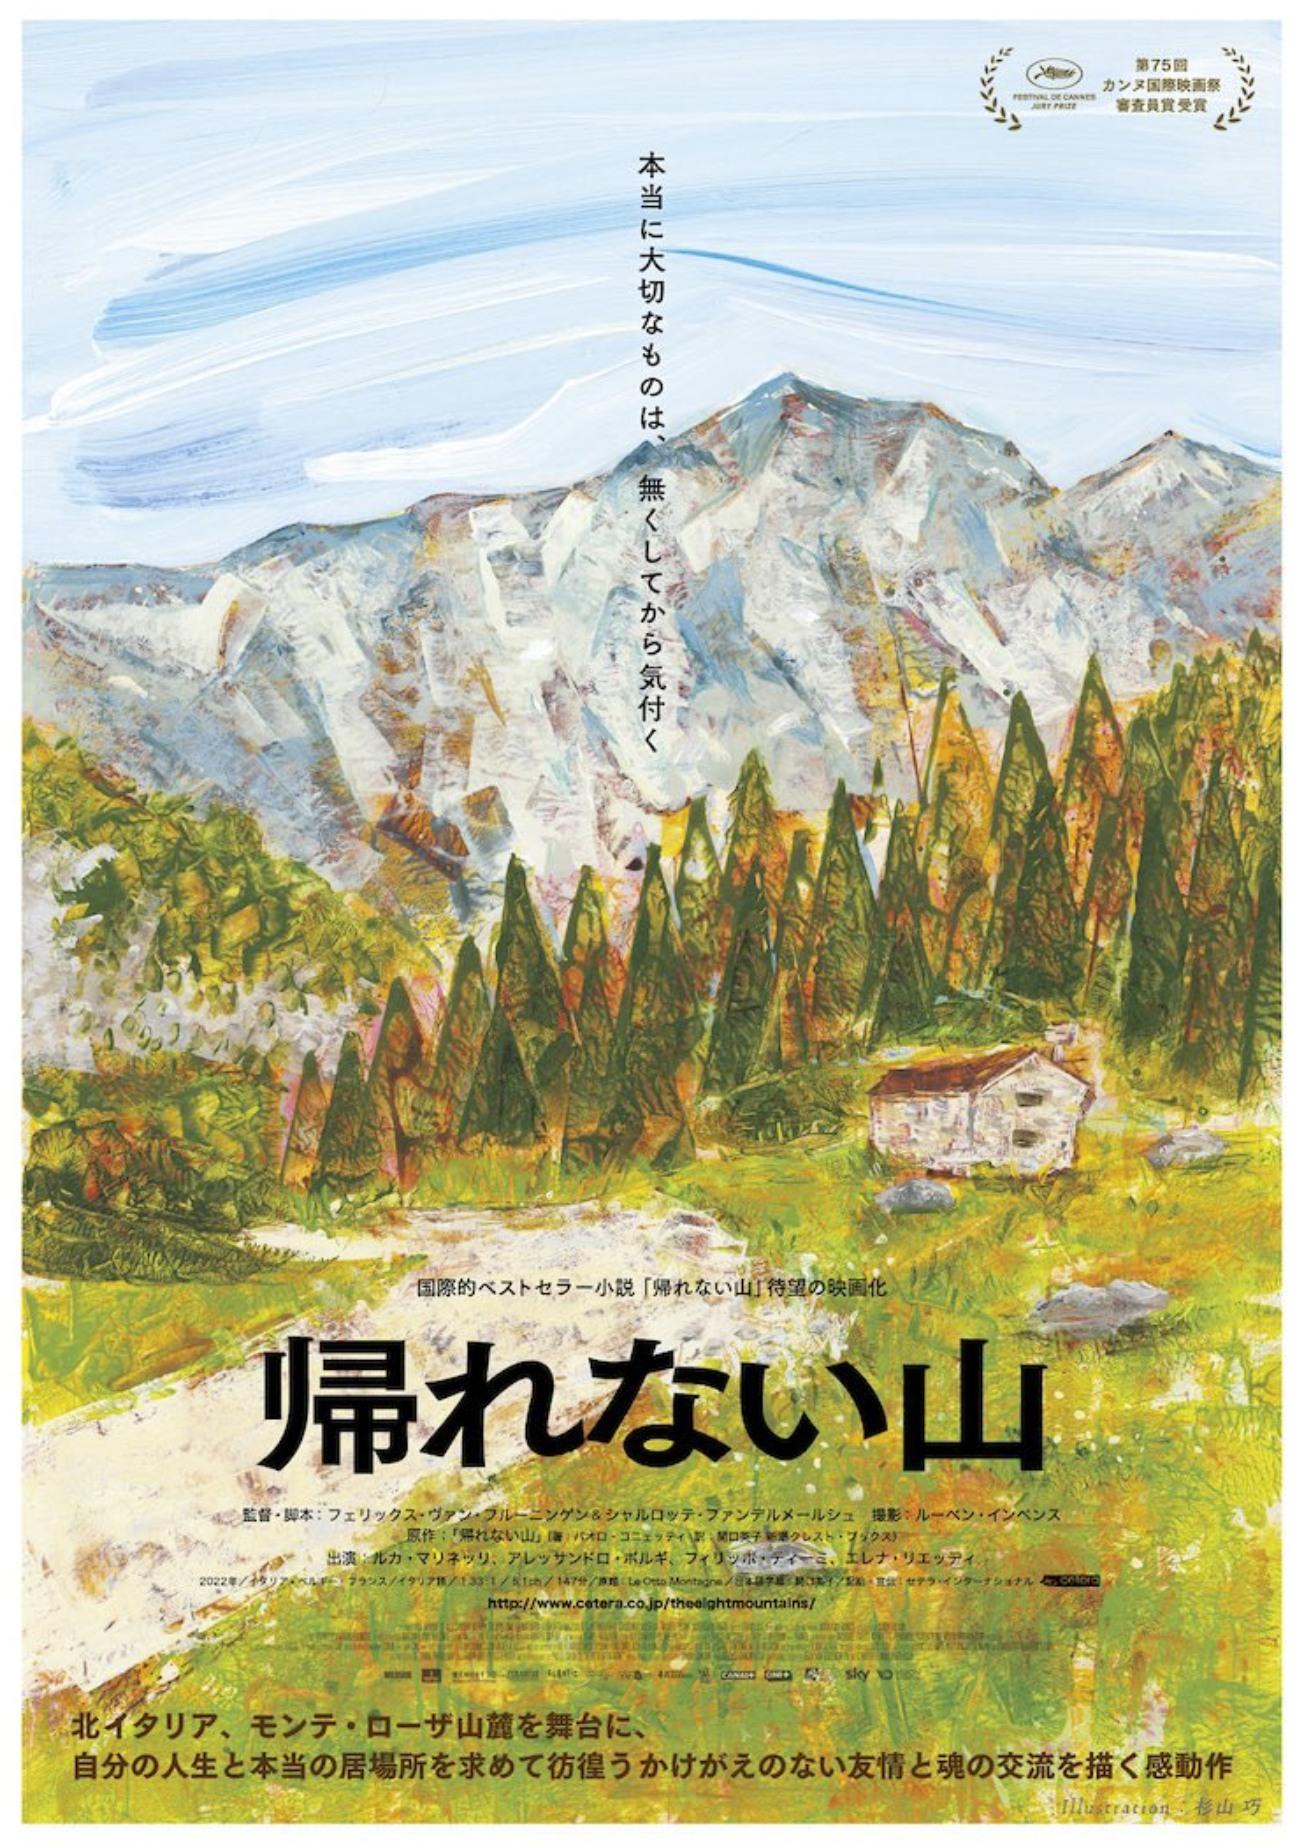 Постер фильма Восемь гор | Le otto montagne